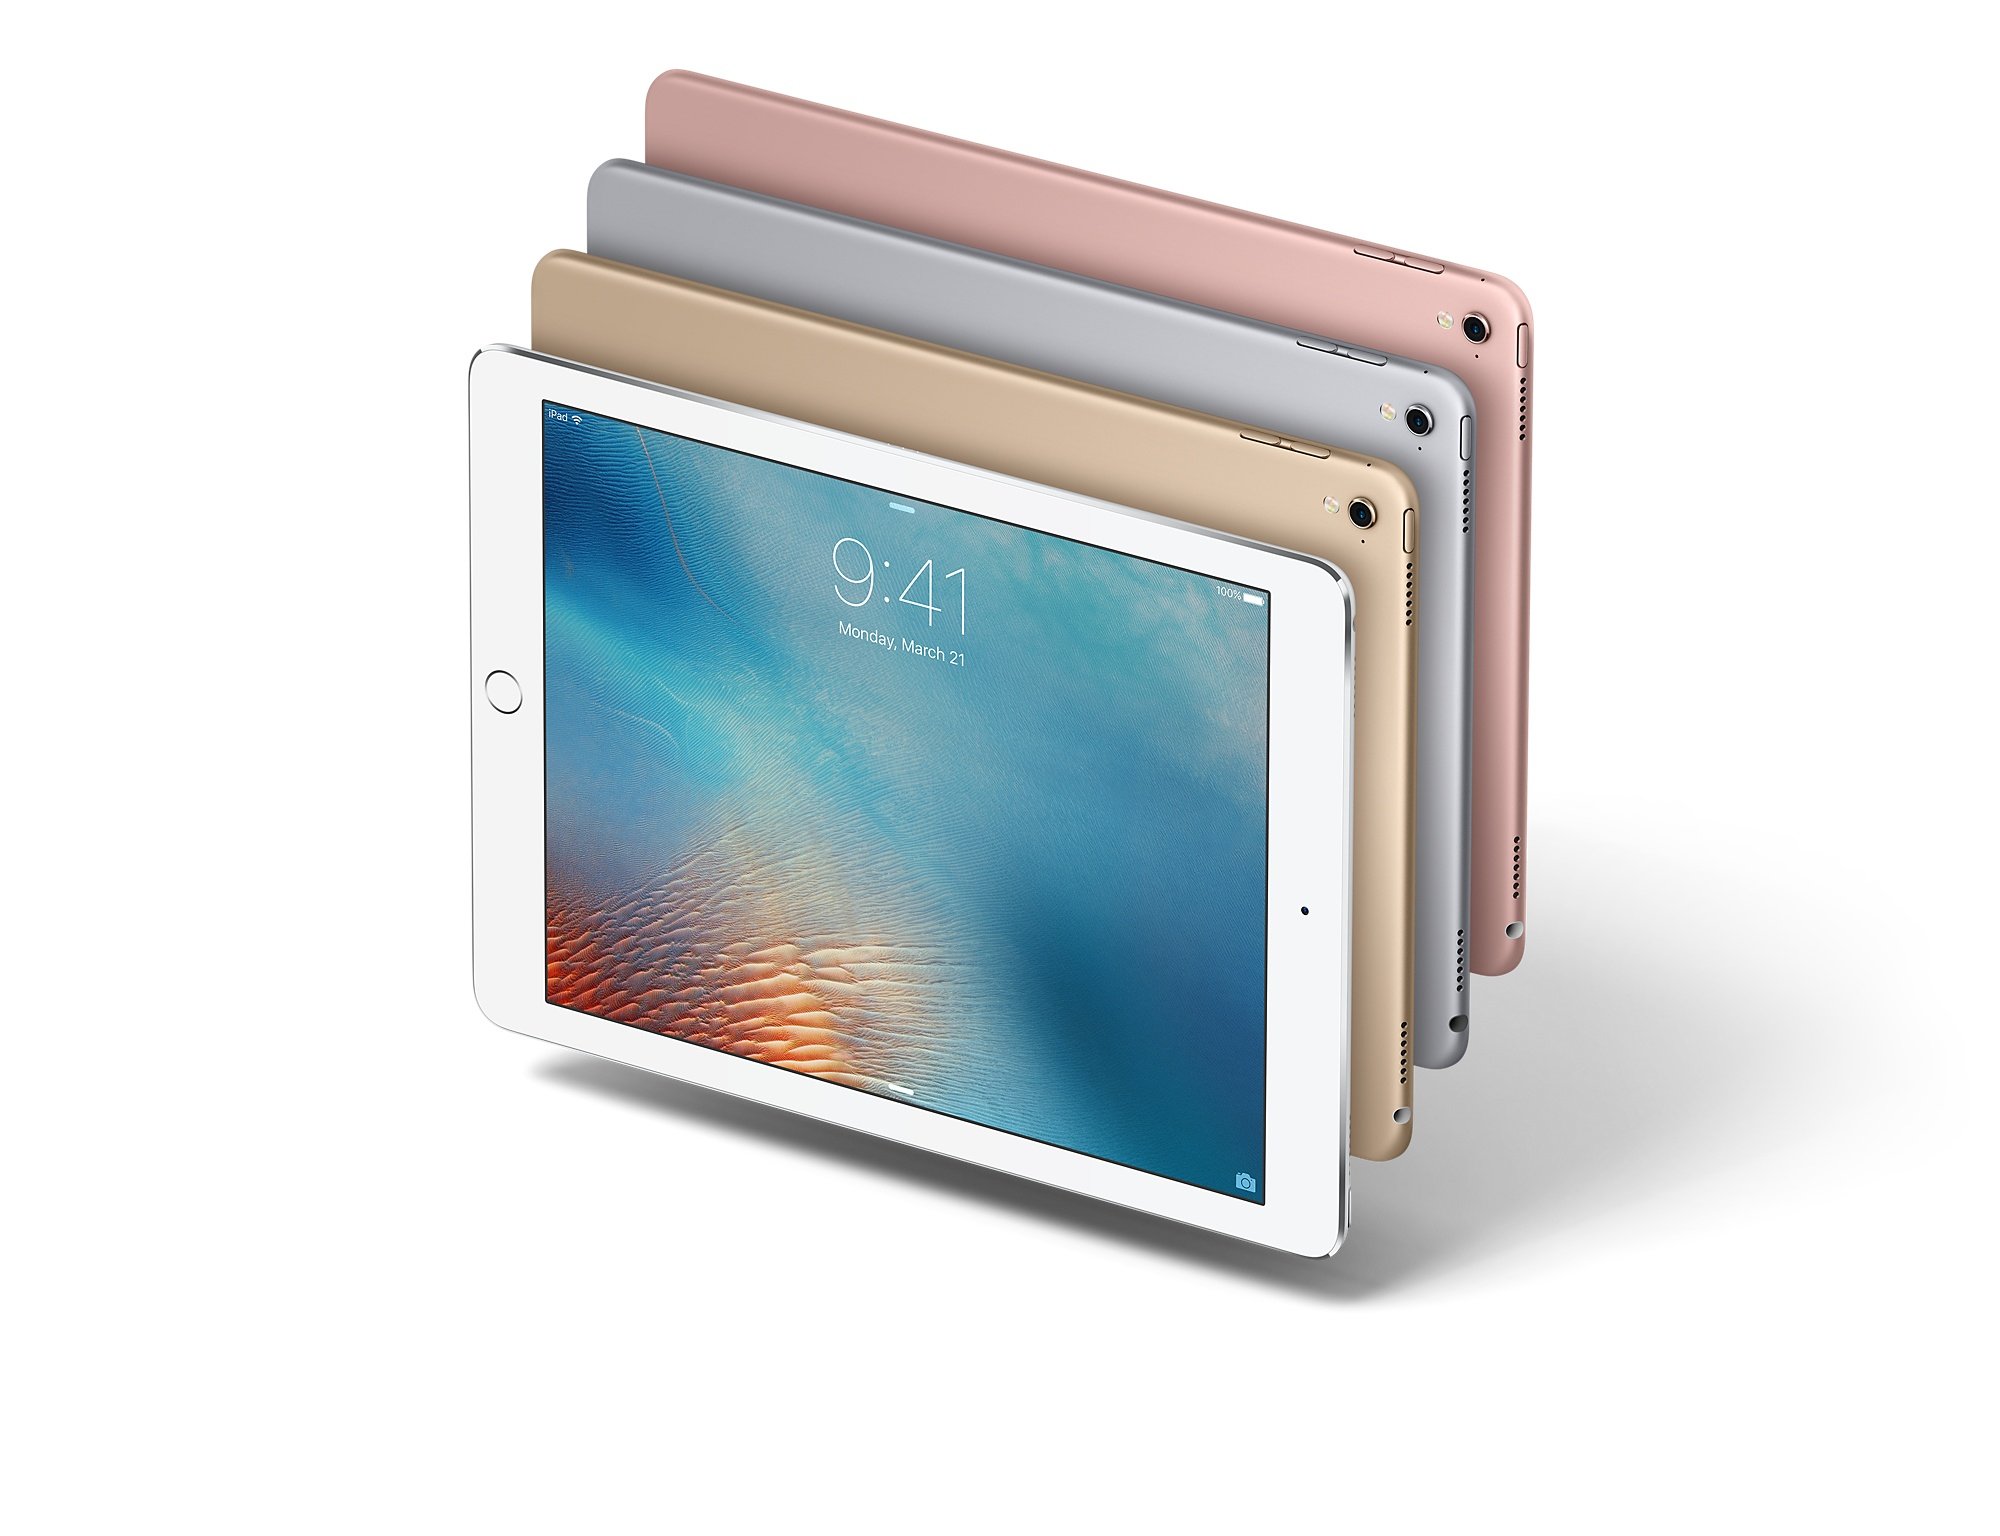 Apple B01DO1CGHG B01DO1CGHG Apple iPad Pro 9.7inch 32GB Wi-Fi - Silver